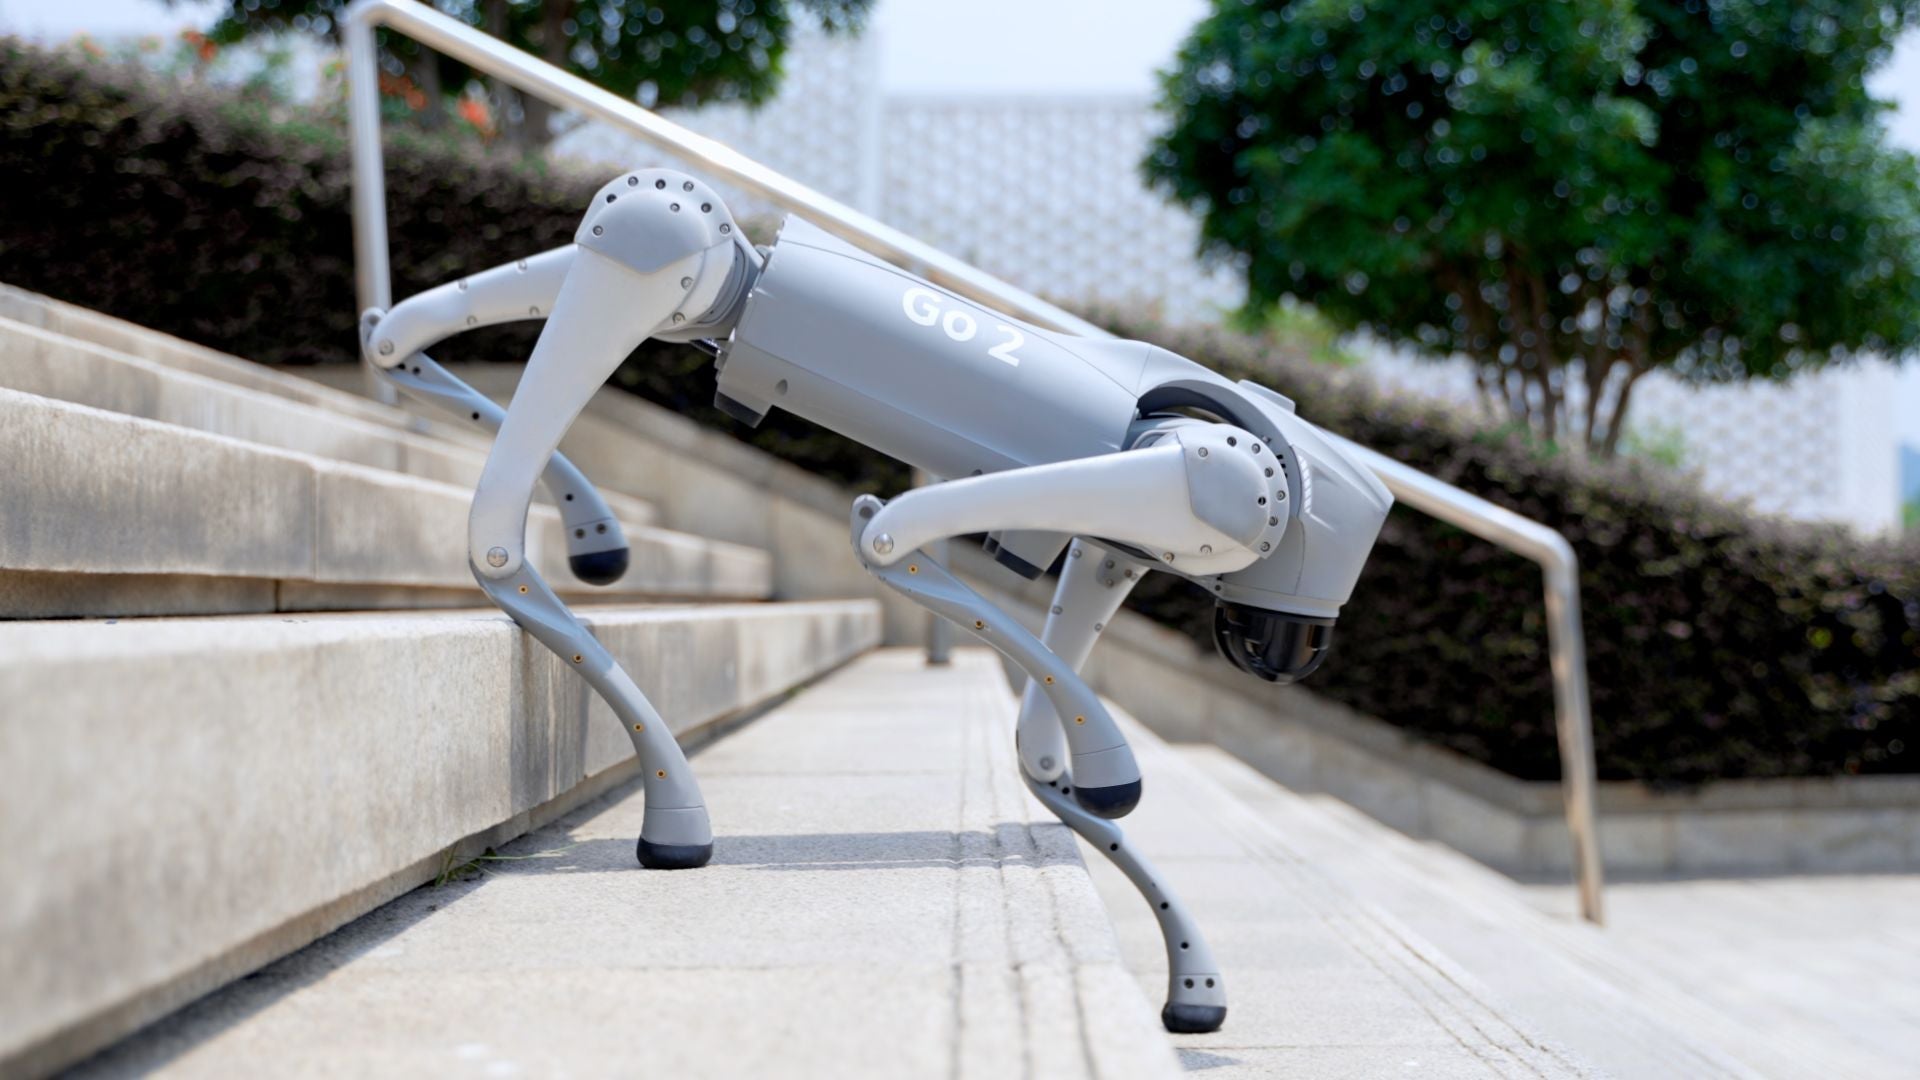 Unitree Go2 Pro AI Quadruped Robot Dog - RoboStore